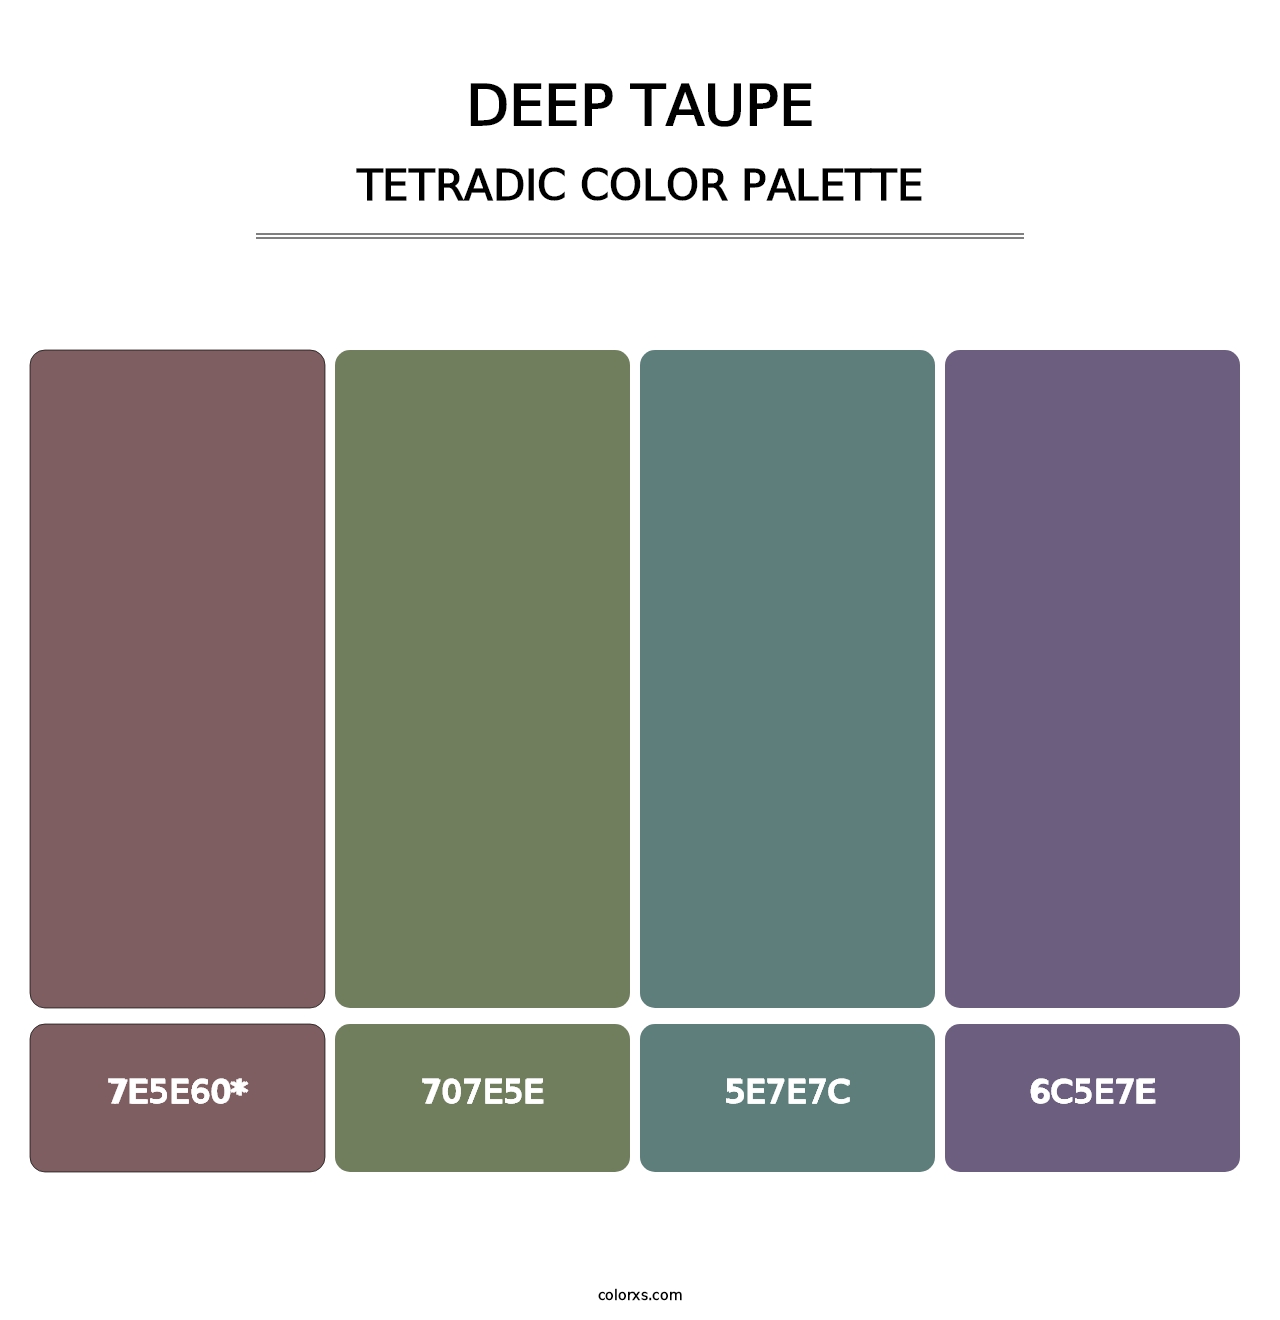 Deep Taupe - Tetradic Color Palette